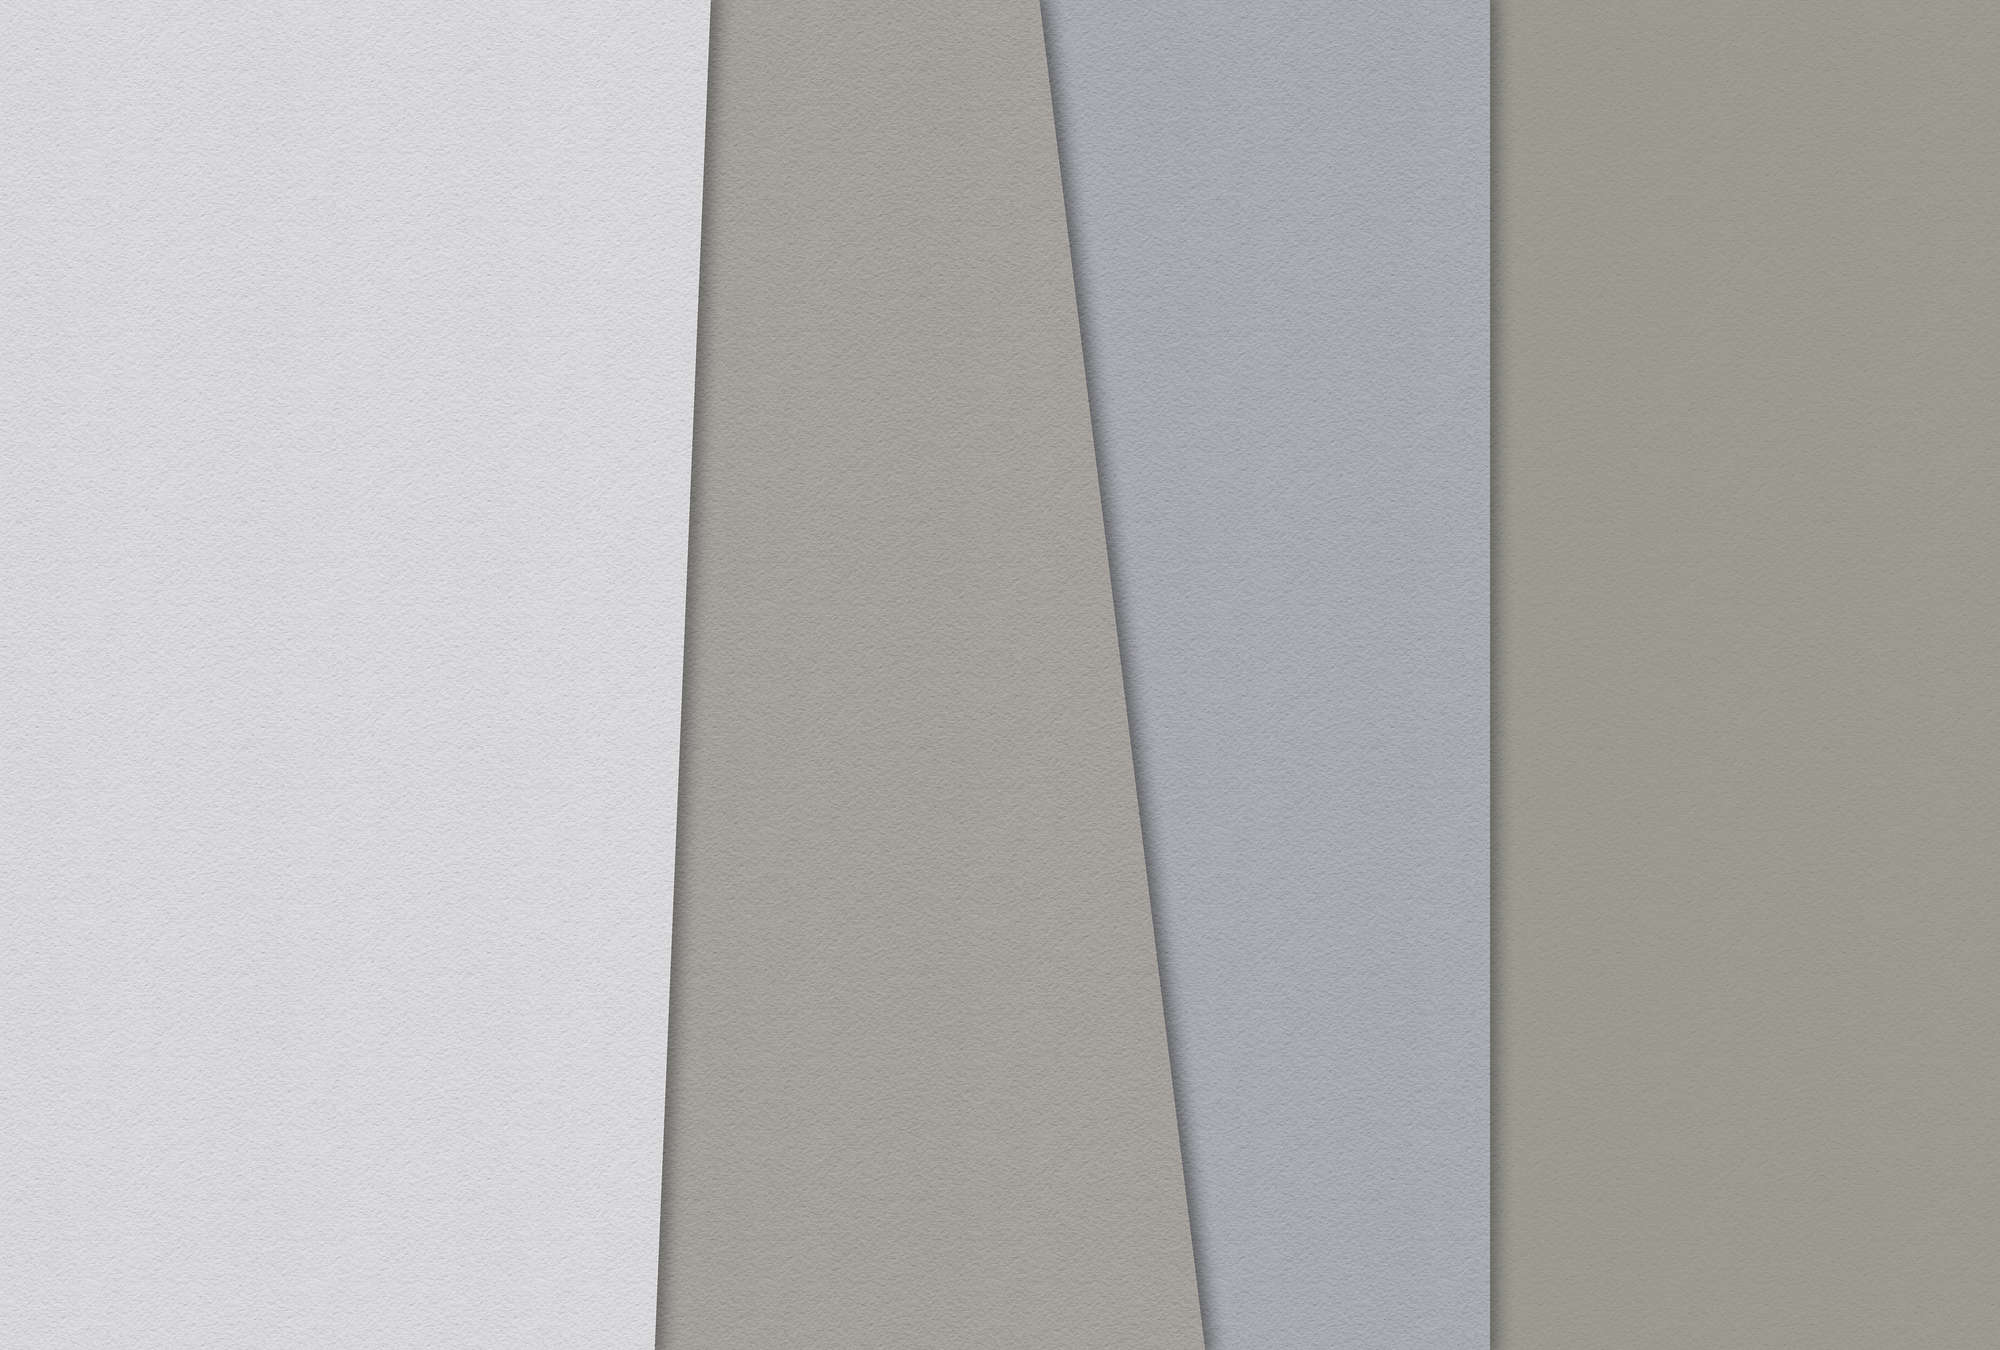             Layered paper 4 - Fototapete Farbflächen Minimalismus in Büttenpapier Struktur – Blau, Creme | Perlmutt Glattvlies
        